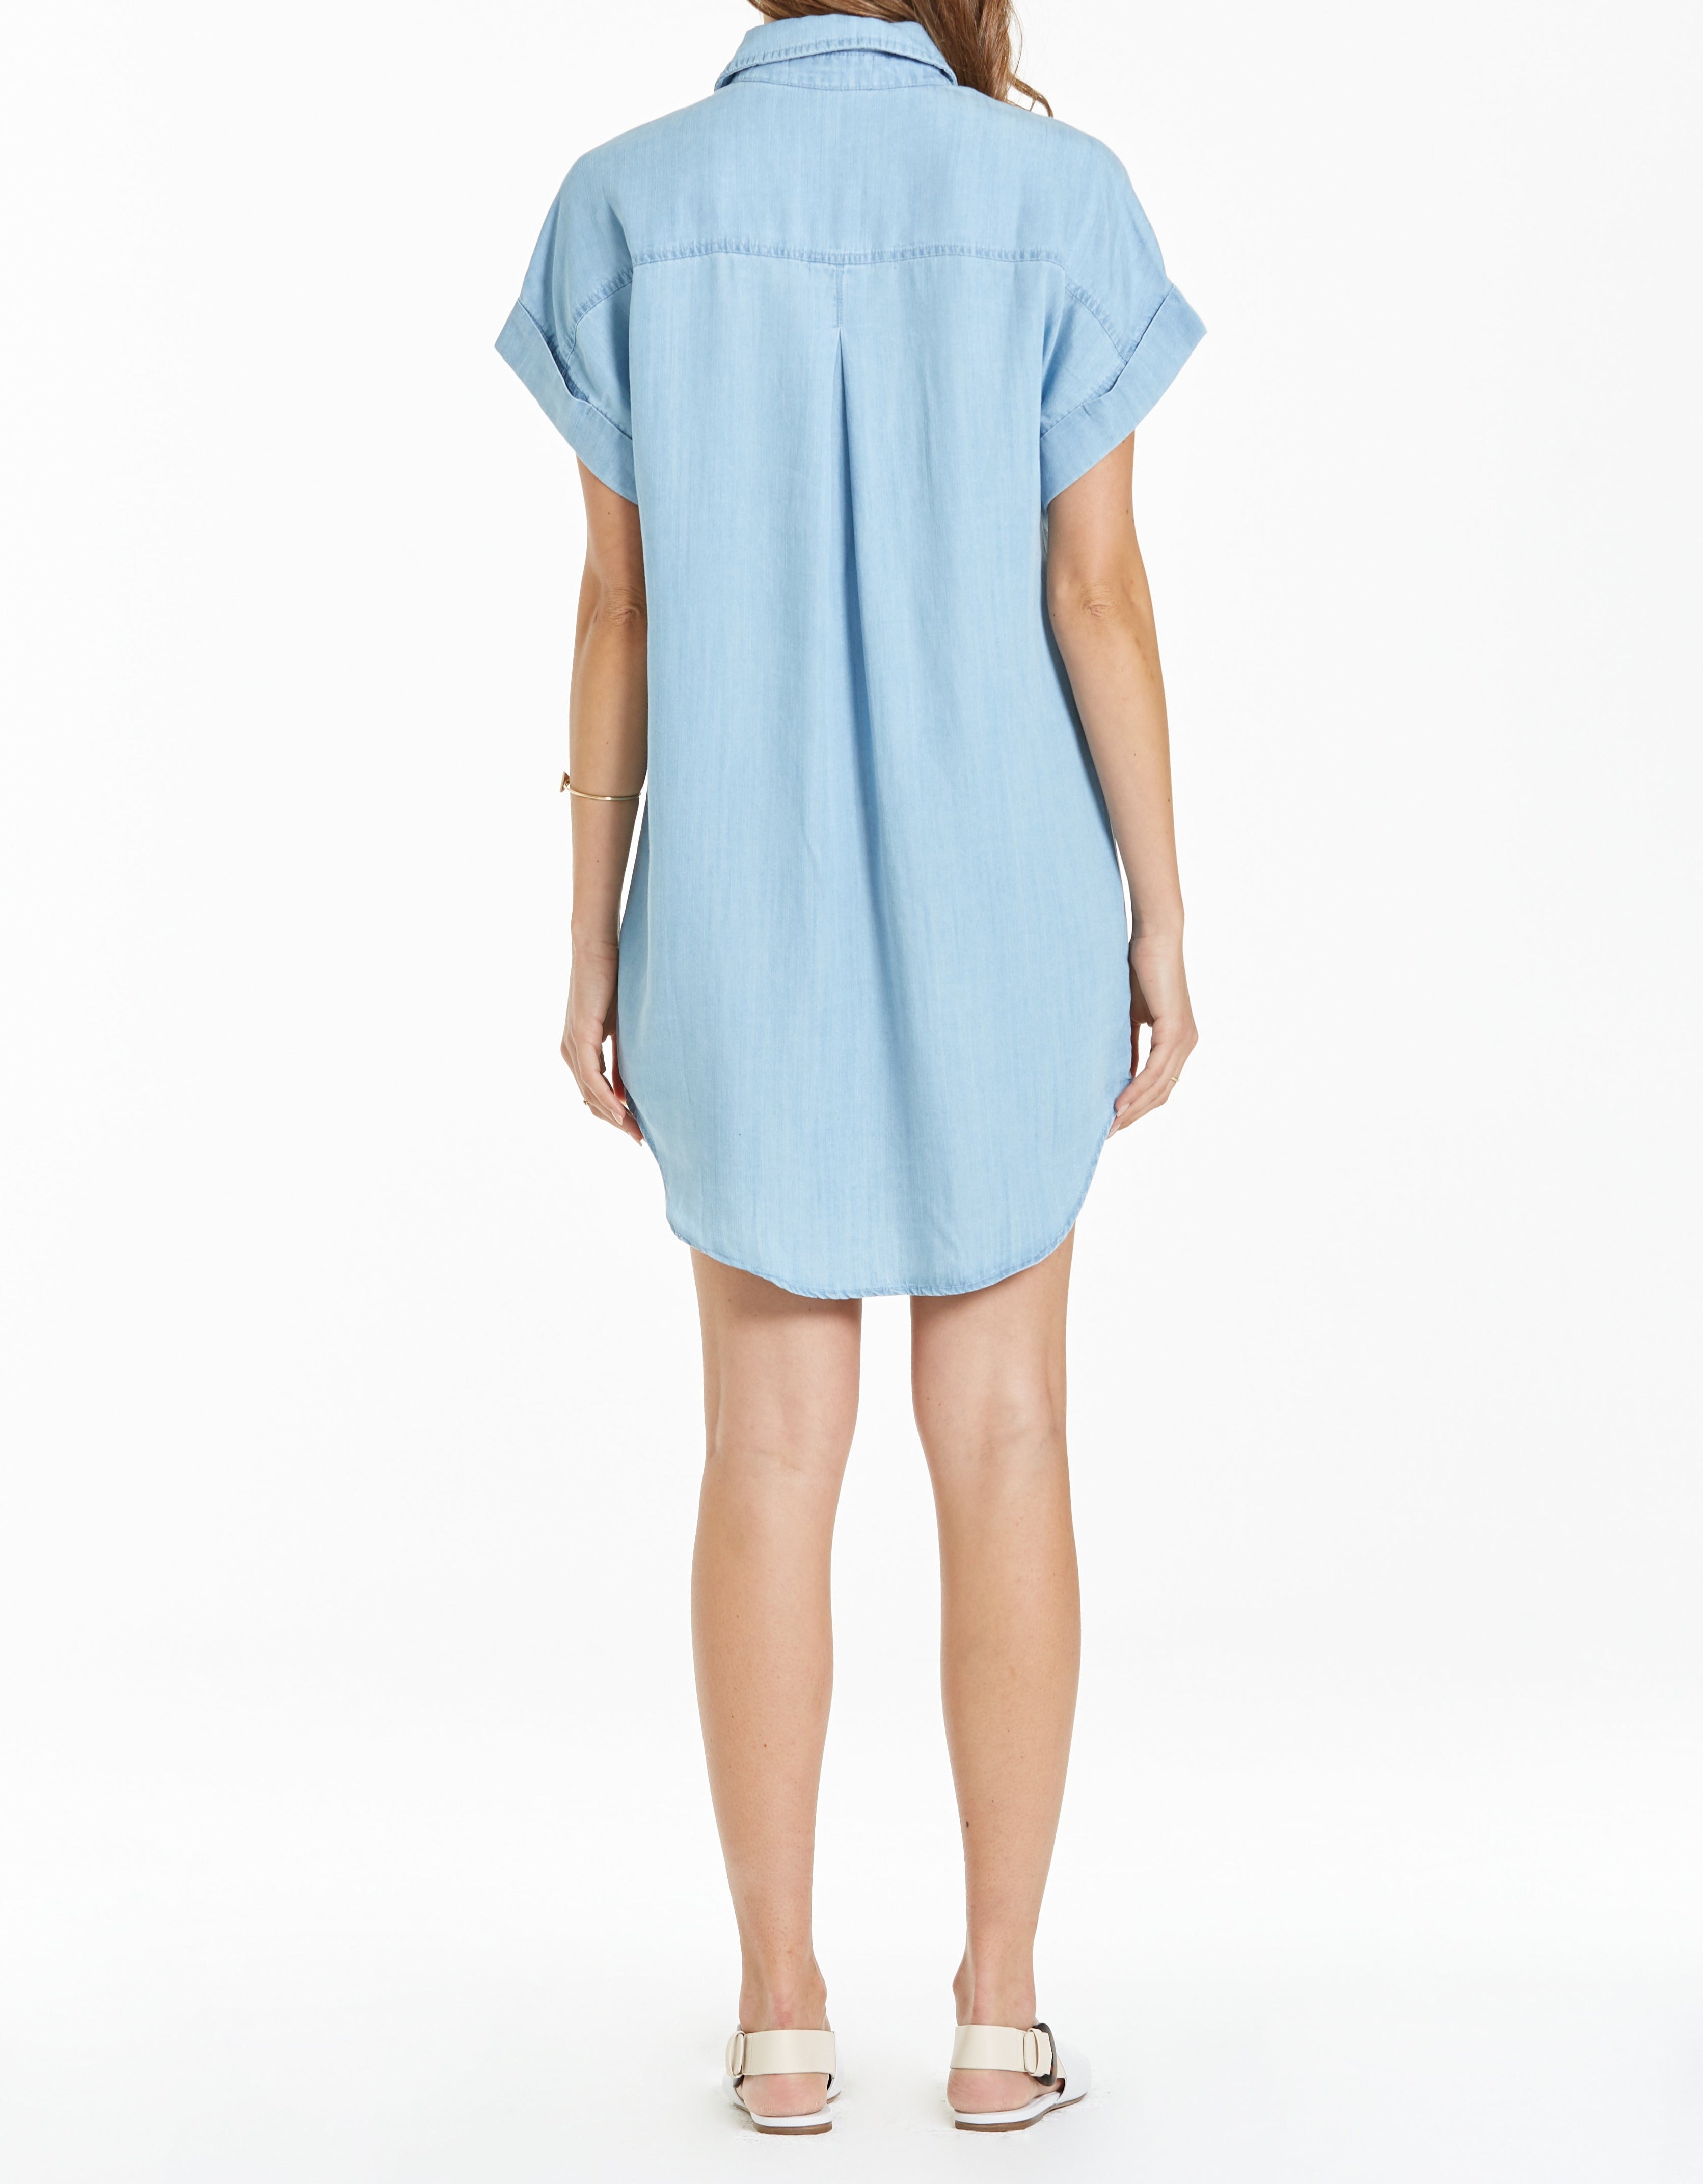 image of a female model wearing a DESTINY BUTTON FRONT SHIRT DRESS BEL AIR BLUE DRESSES